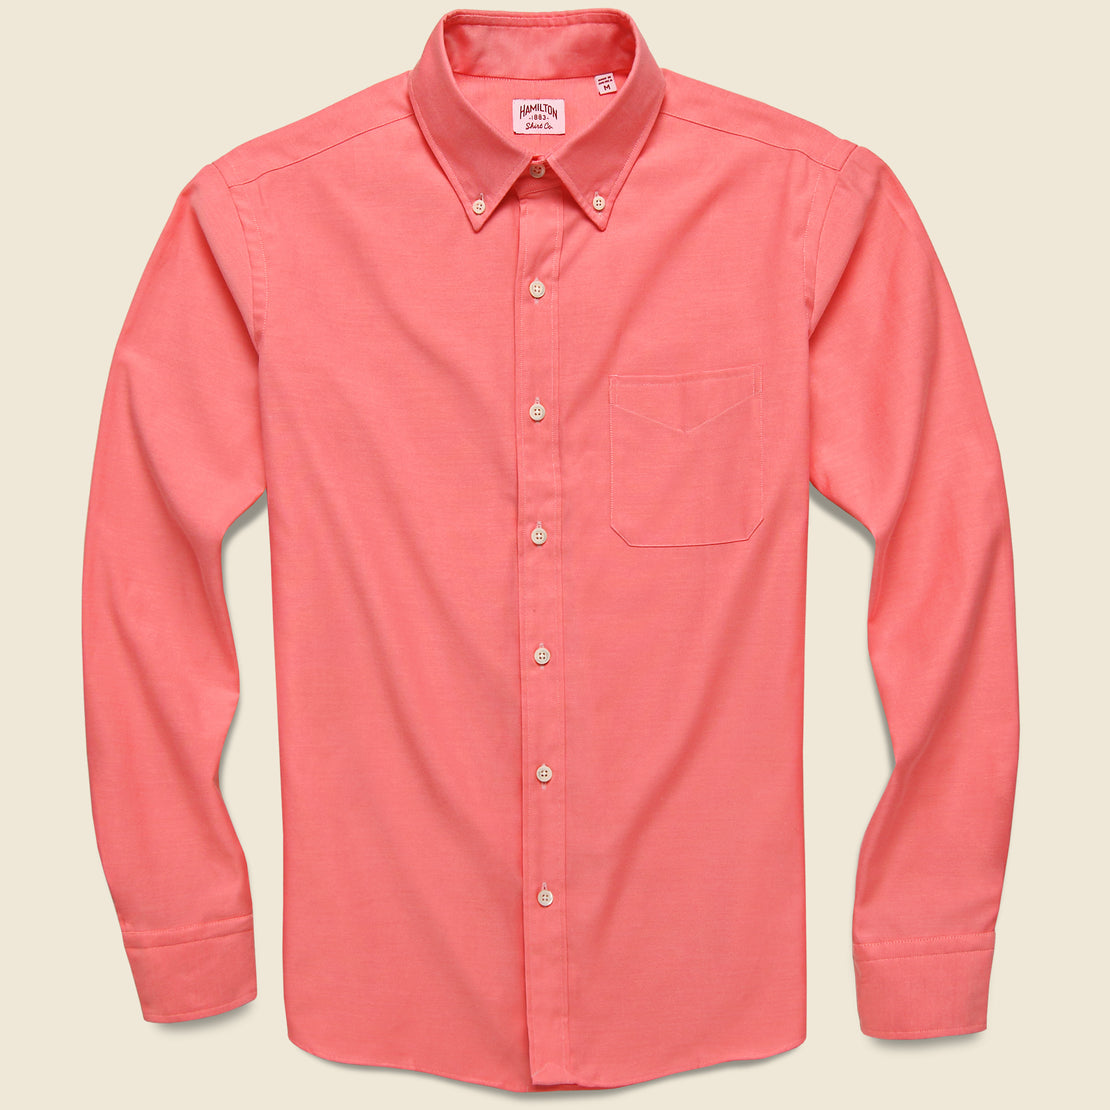 Hamilton Shirt Co. Neon Oxford Shirt - Pink